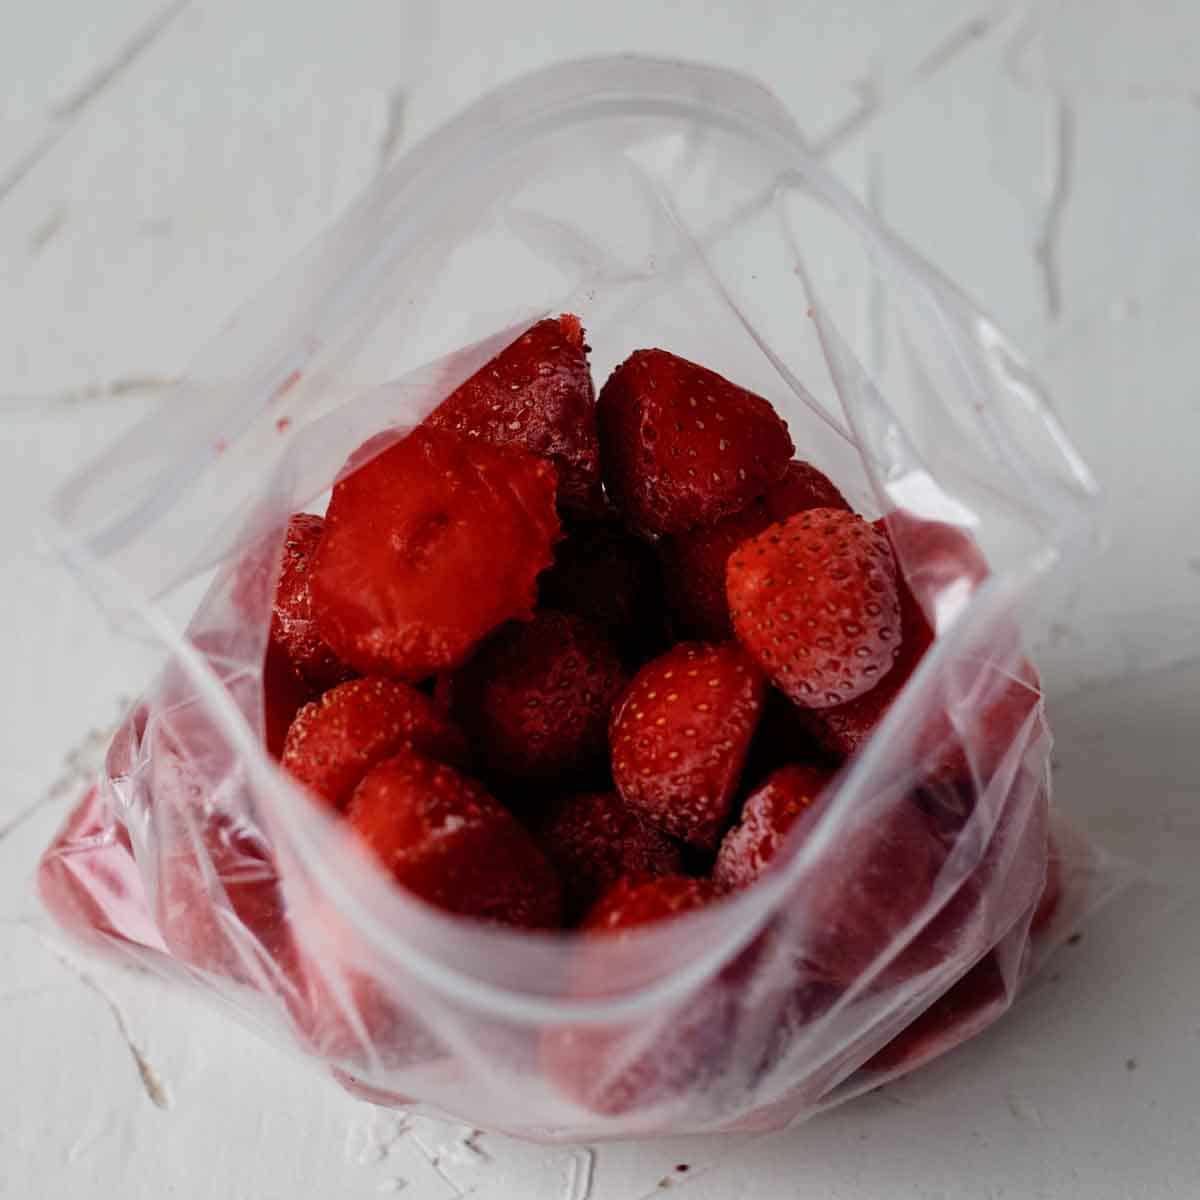 Plastic bag with frozen strawberries in it.